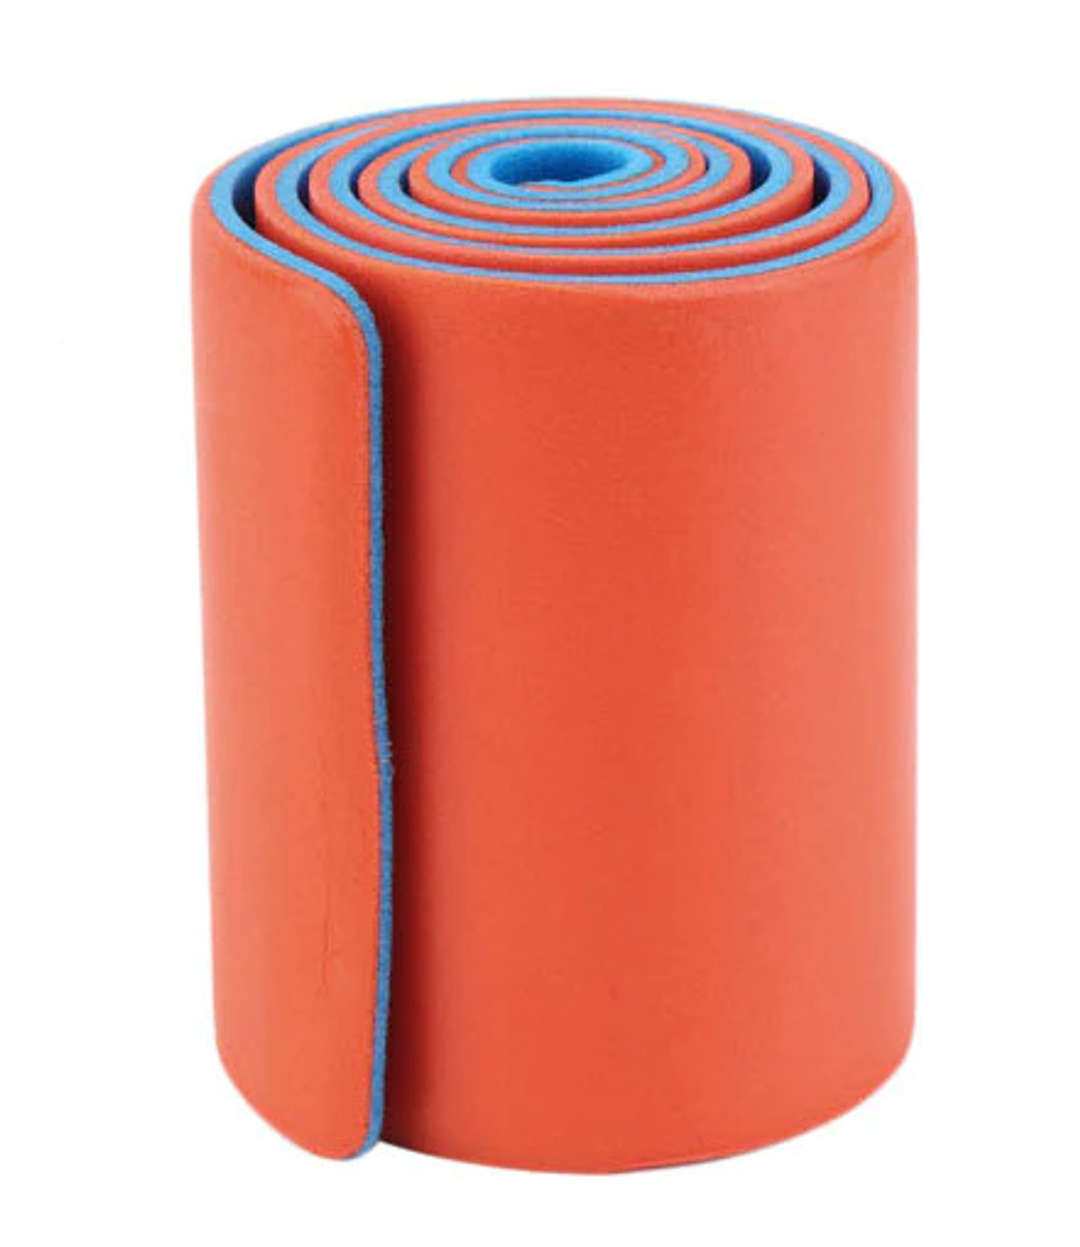 Dyna Arm Splint - Ortho 4.25 Inch x 36 Inch - Orange & Blue